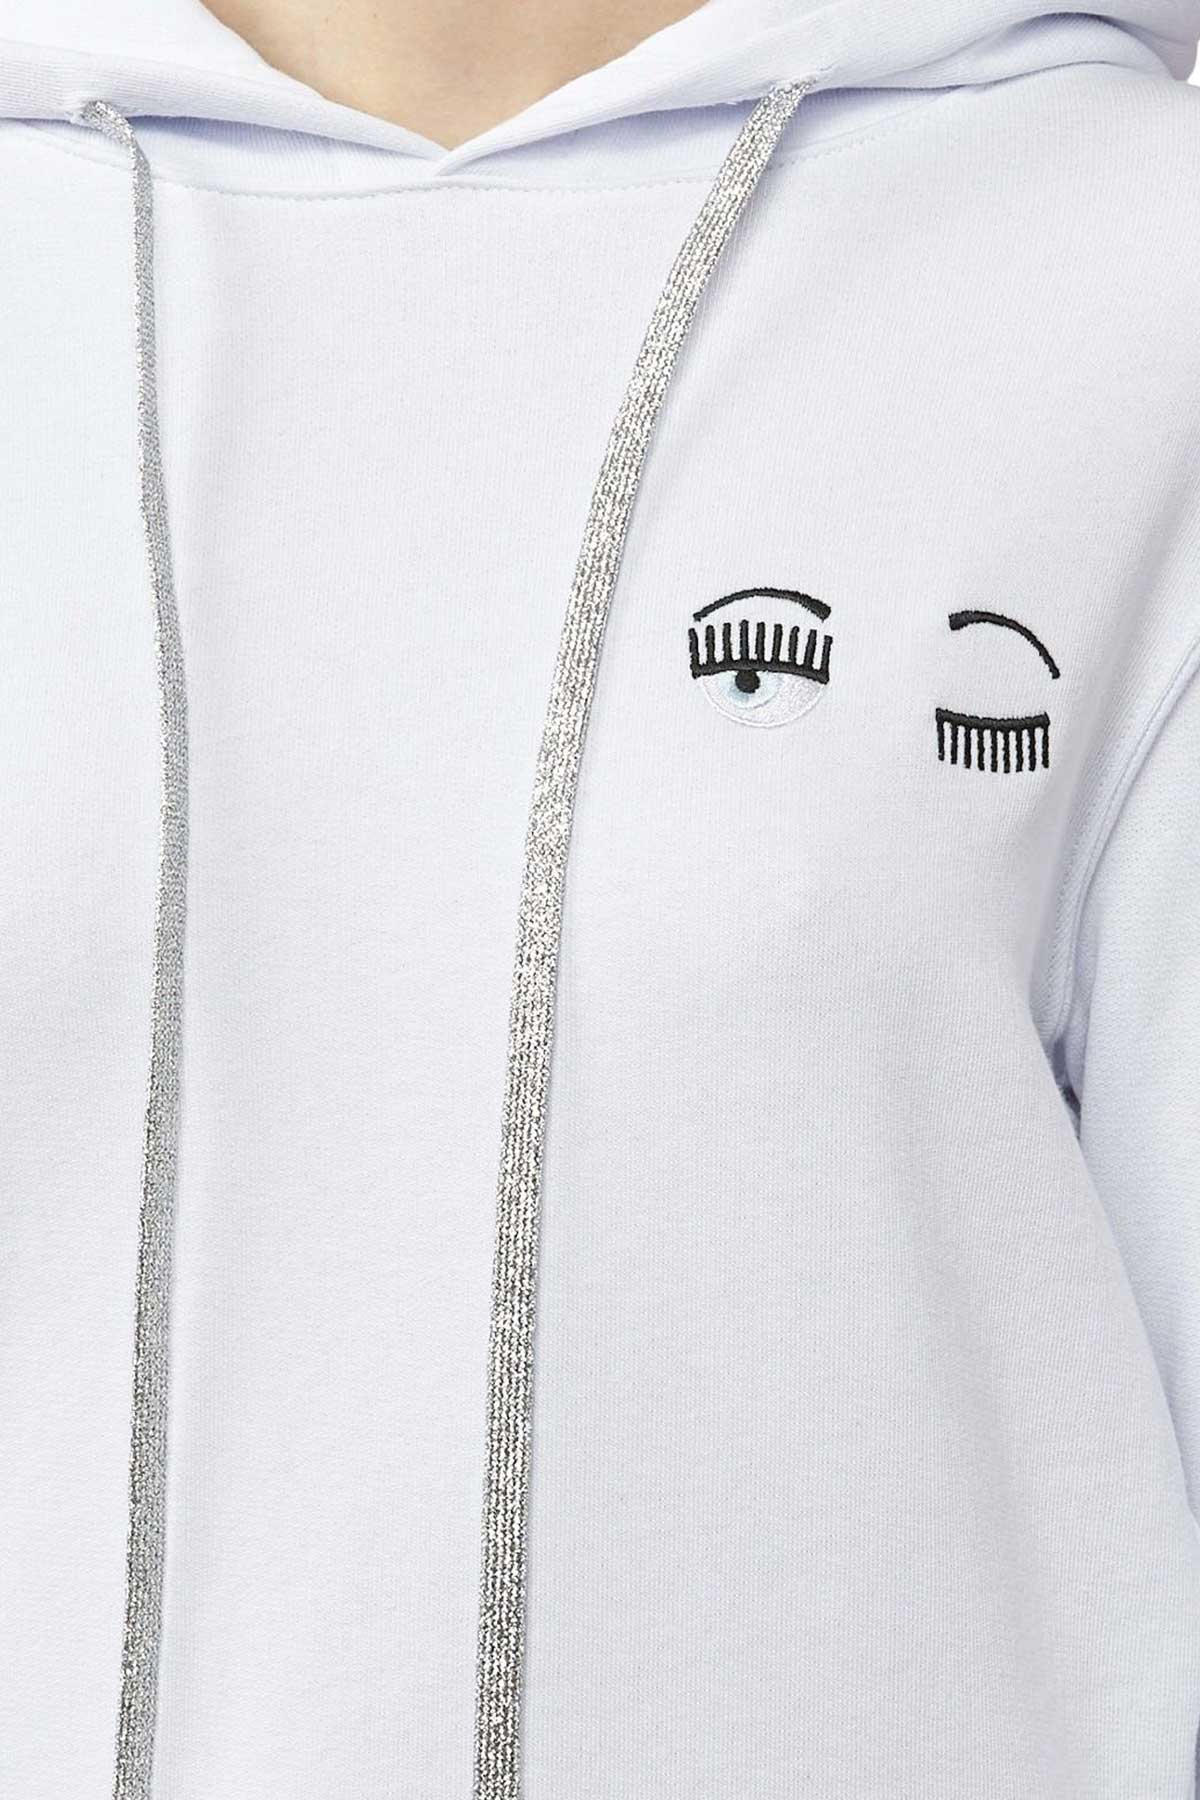 Chiara Ferragni Kapüşonlu Sweatshirt-Libas Trendy Fashion Store